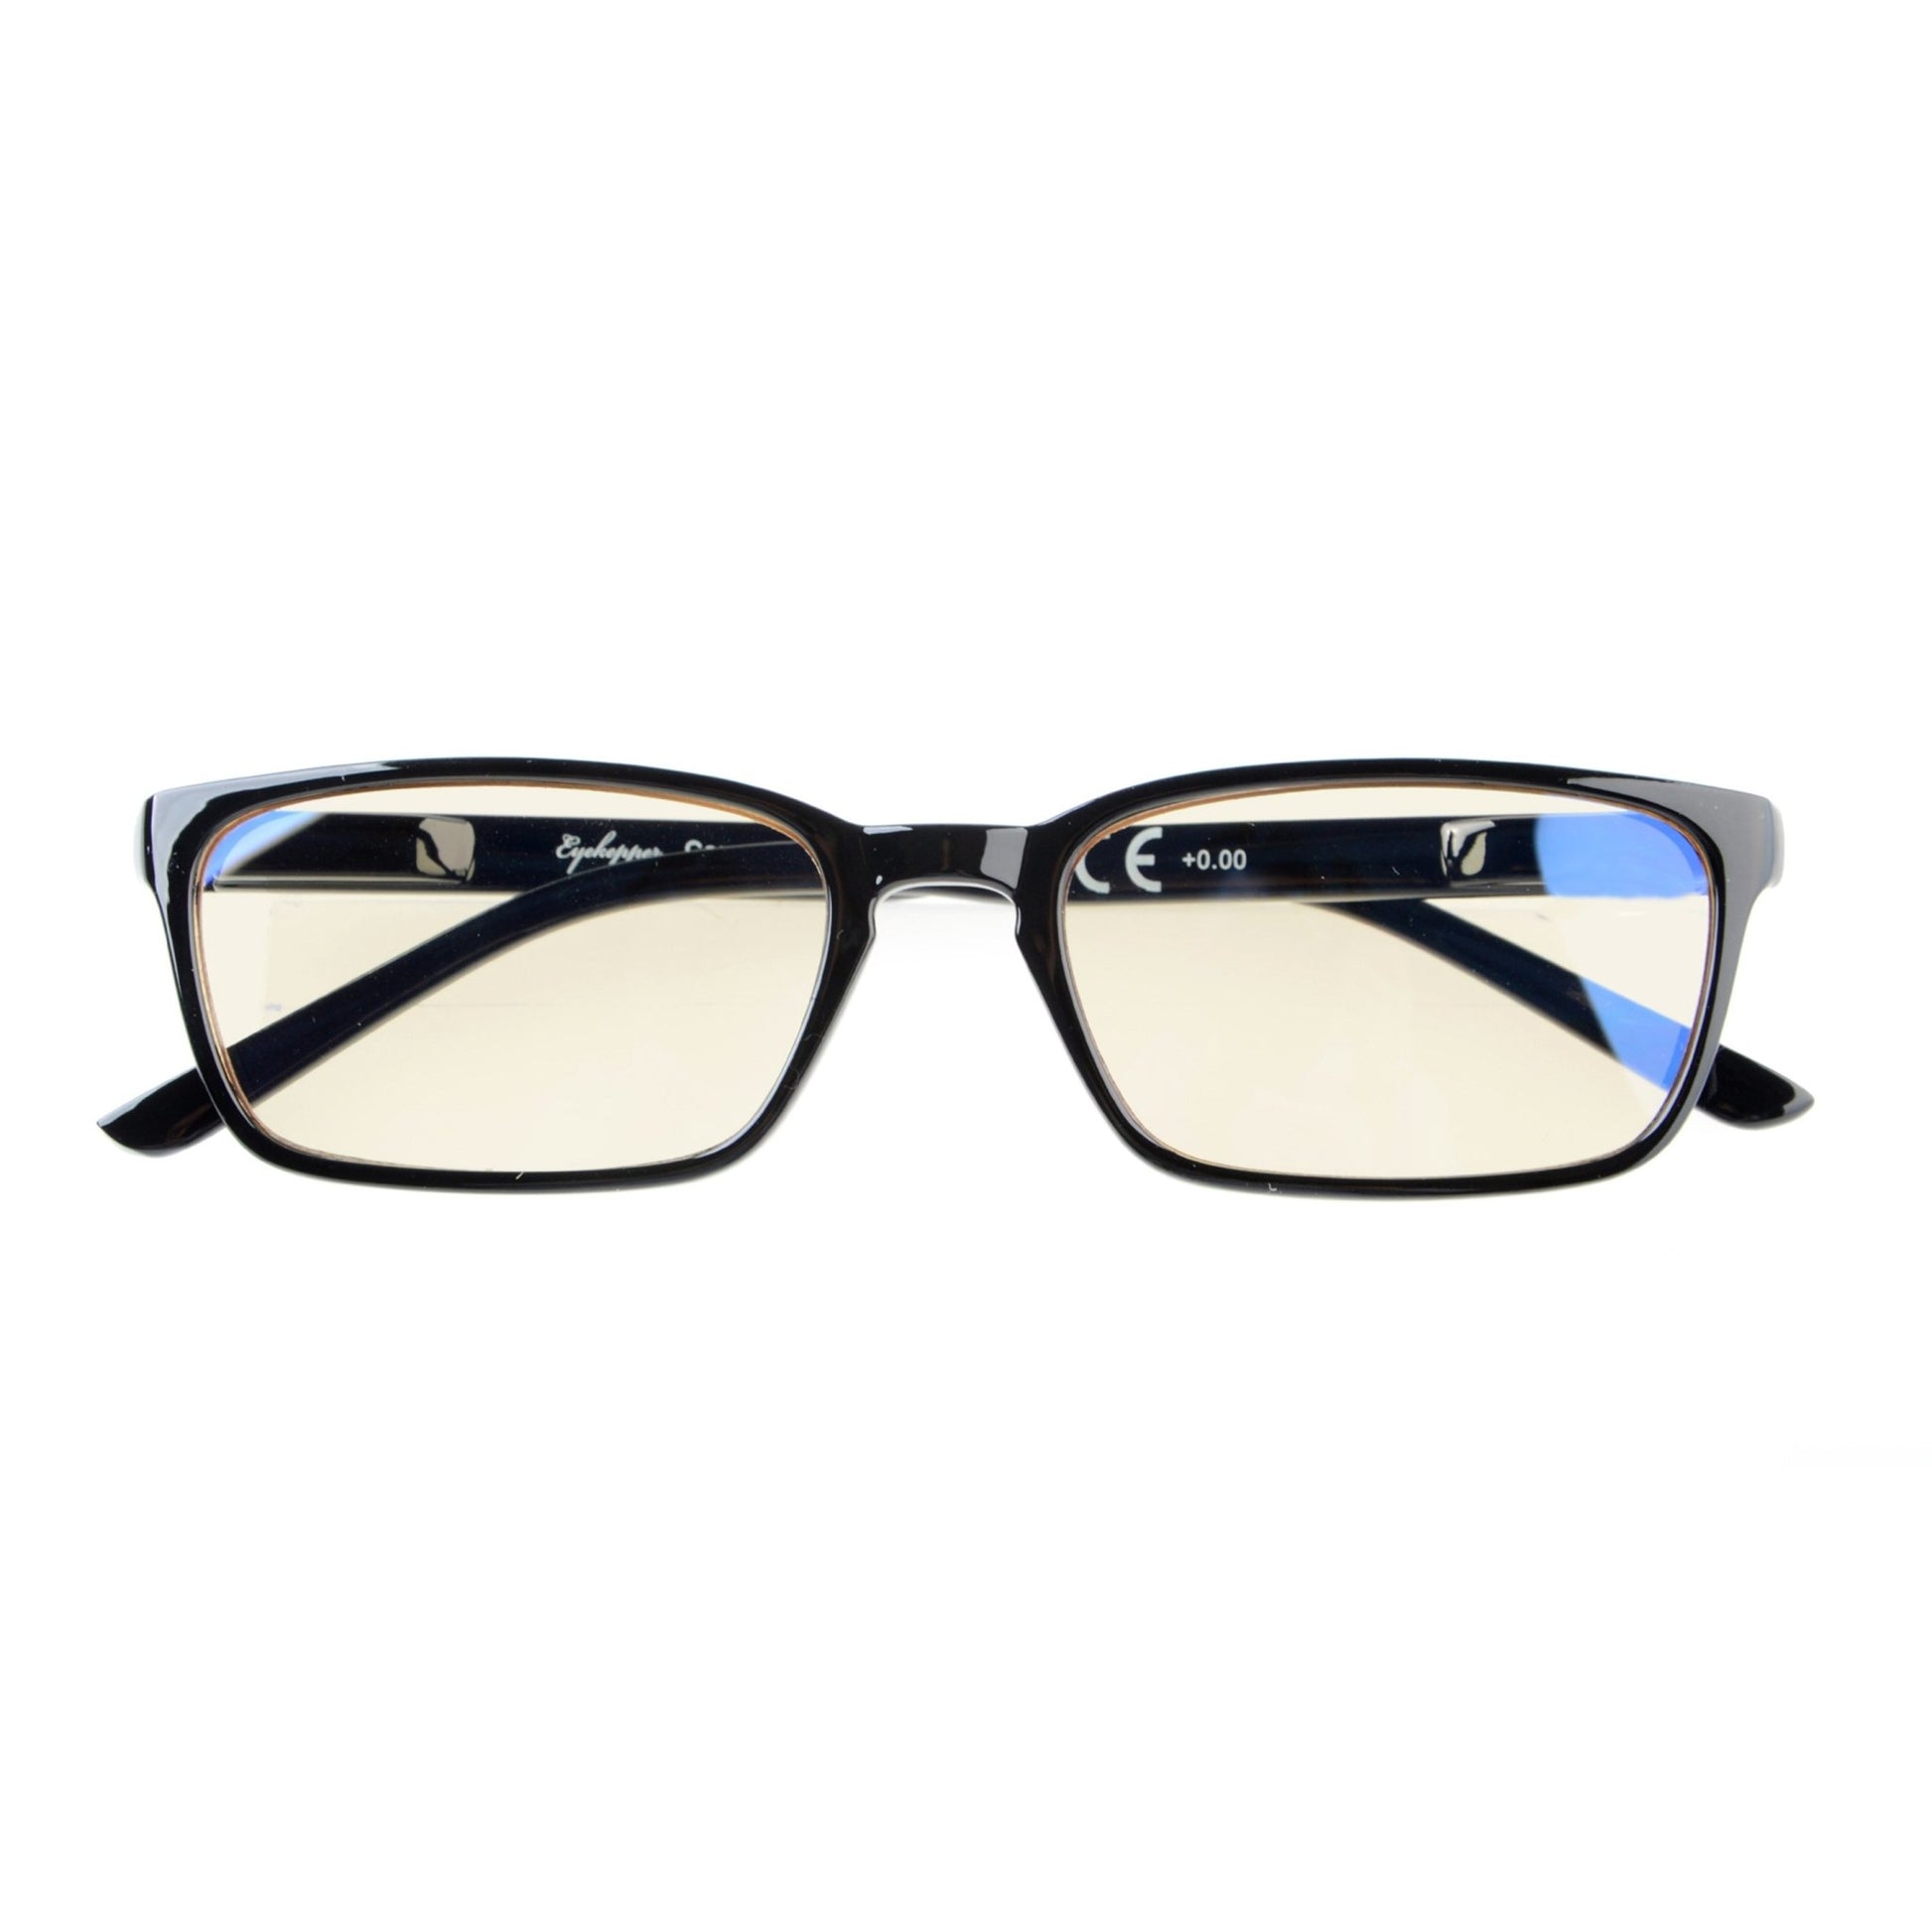 Teumire Blue Light Blocking Glasses Women Men Retro Round Frame Eyeglasses  Anti Eyestrain UV Glare Filter Eyewear